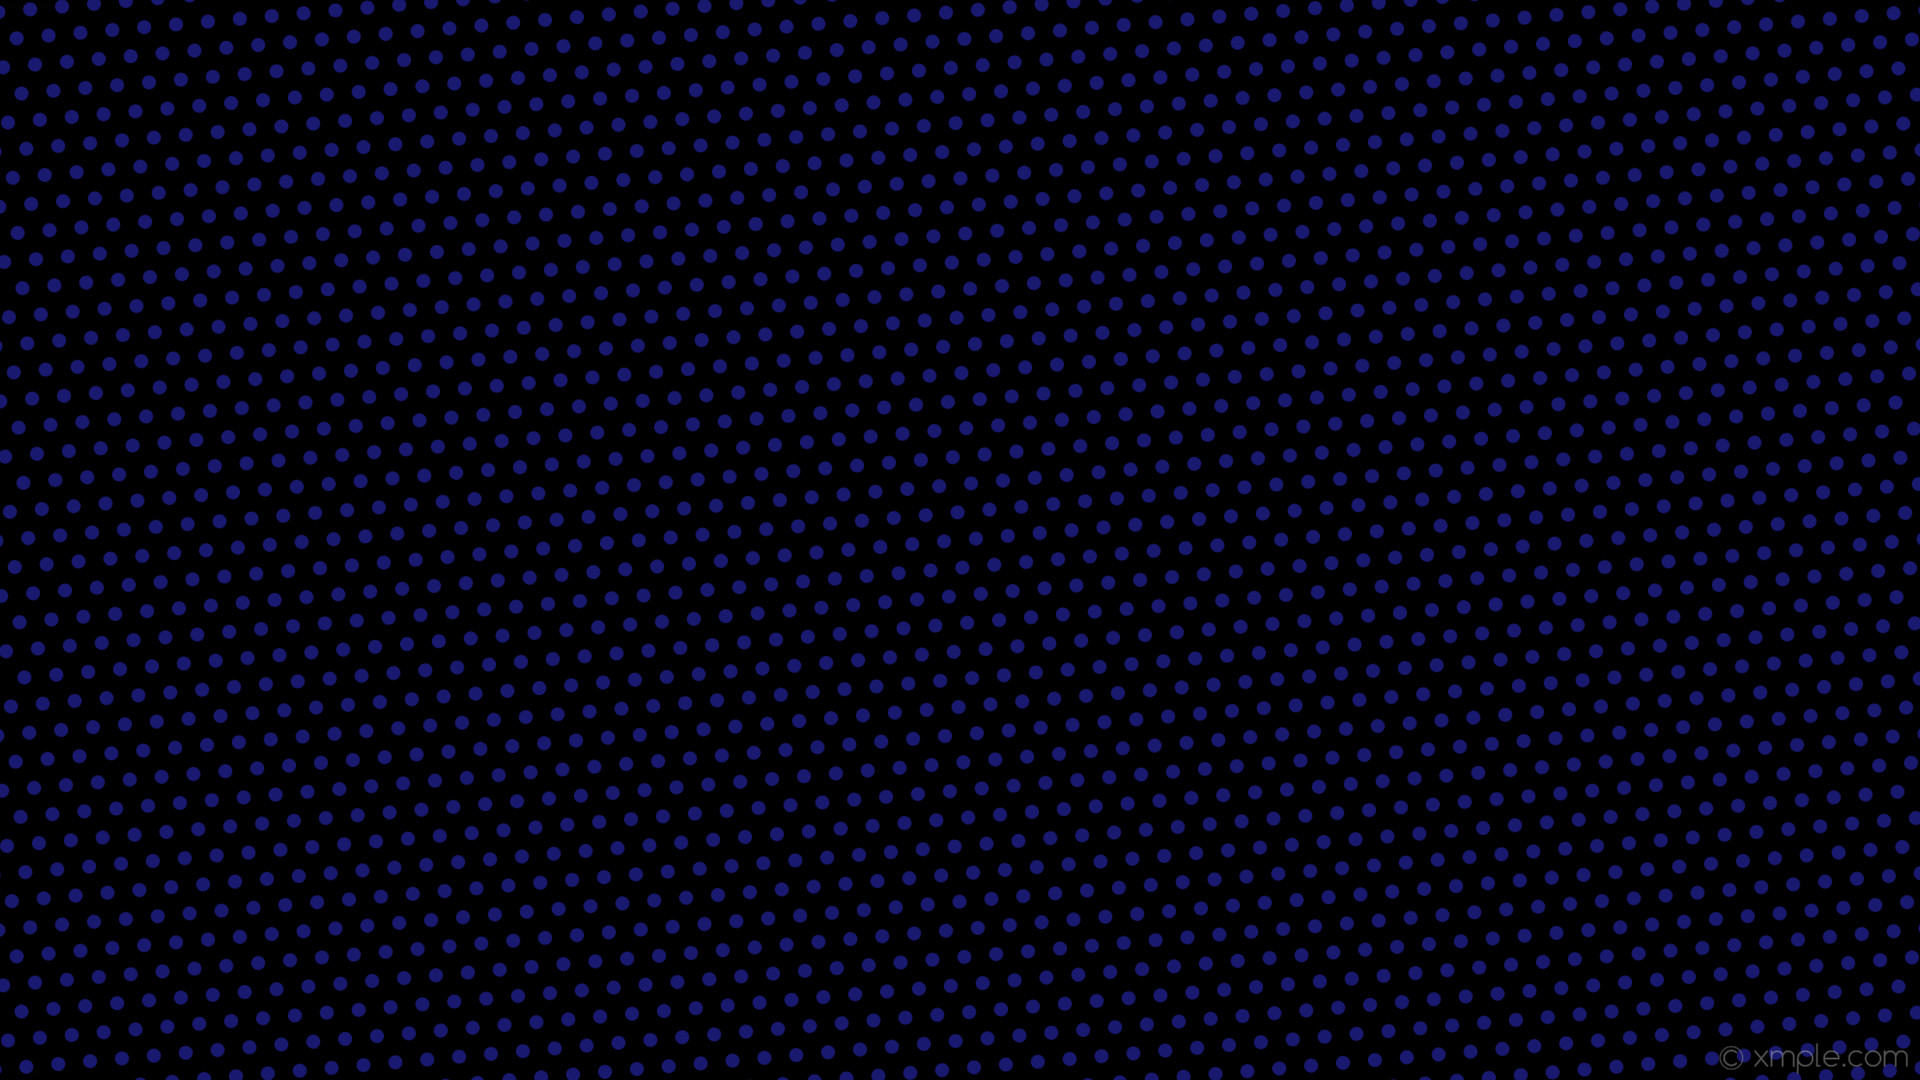 1920x1080 wallpaper dots hexagon blue polka black midnight blue #000000 #191970  diagonal 5Â° 14px